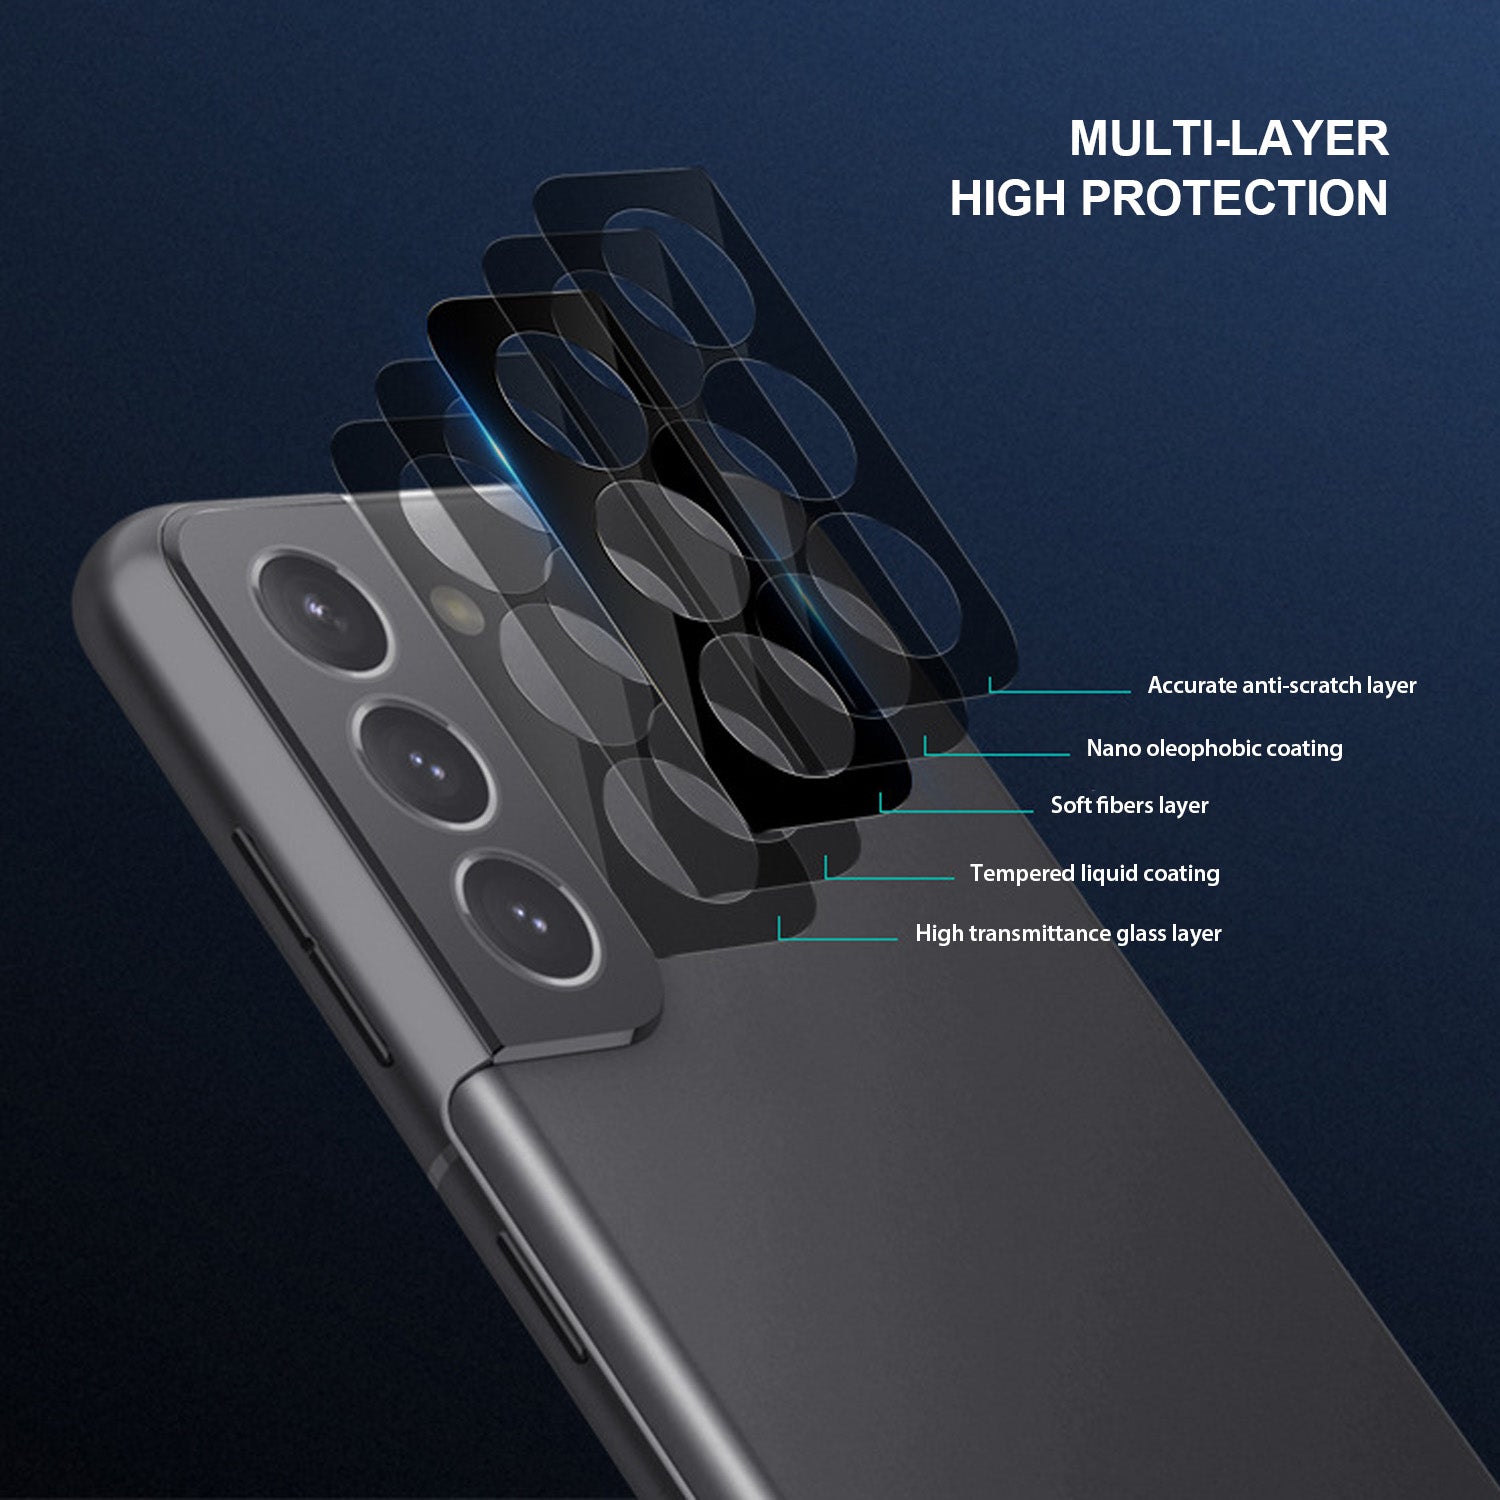 Type Gorilla Samsung Galaxy S21 5G Tempered Glass Camera Protector Black